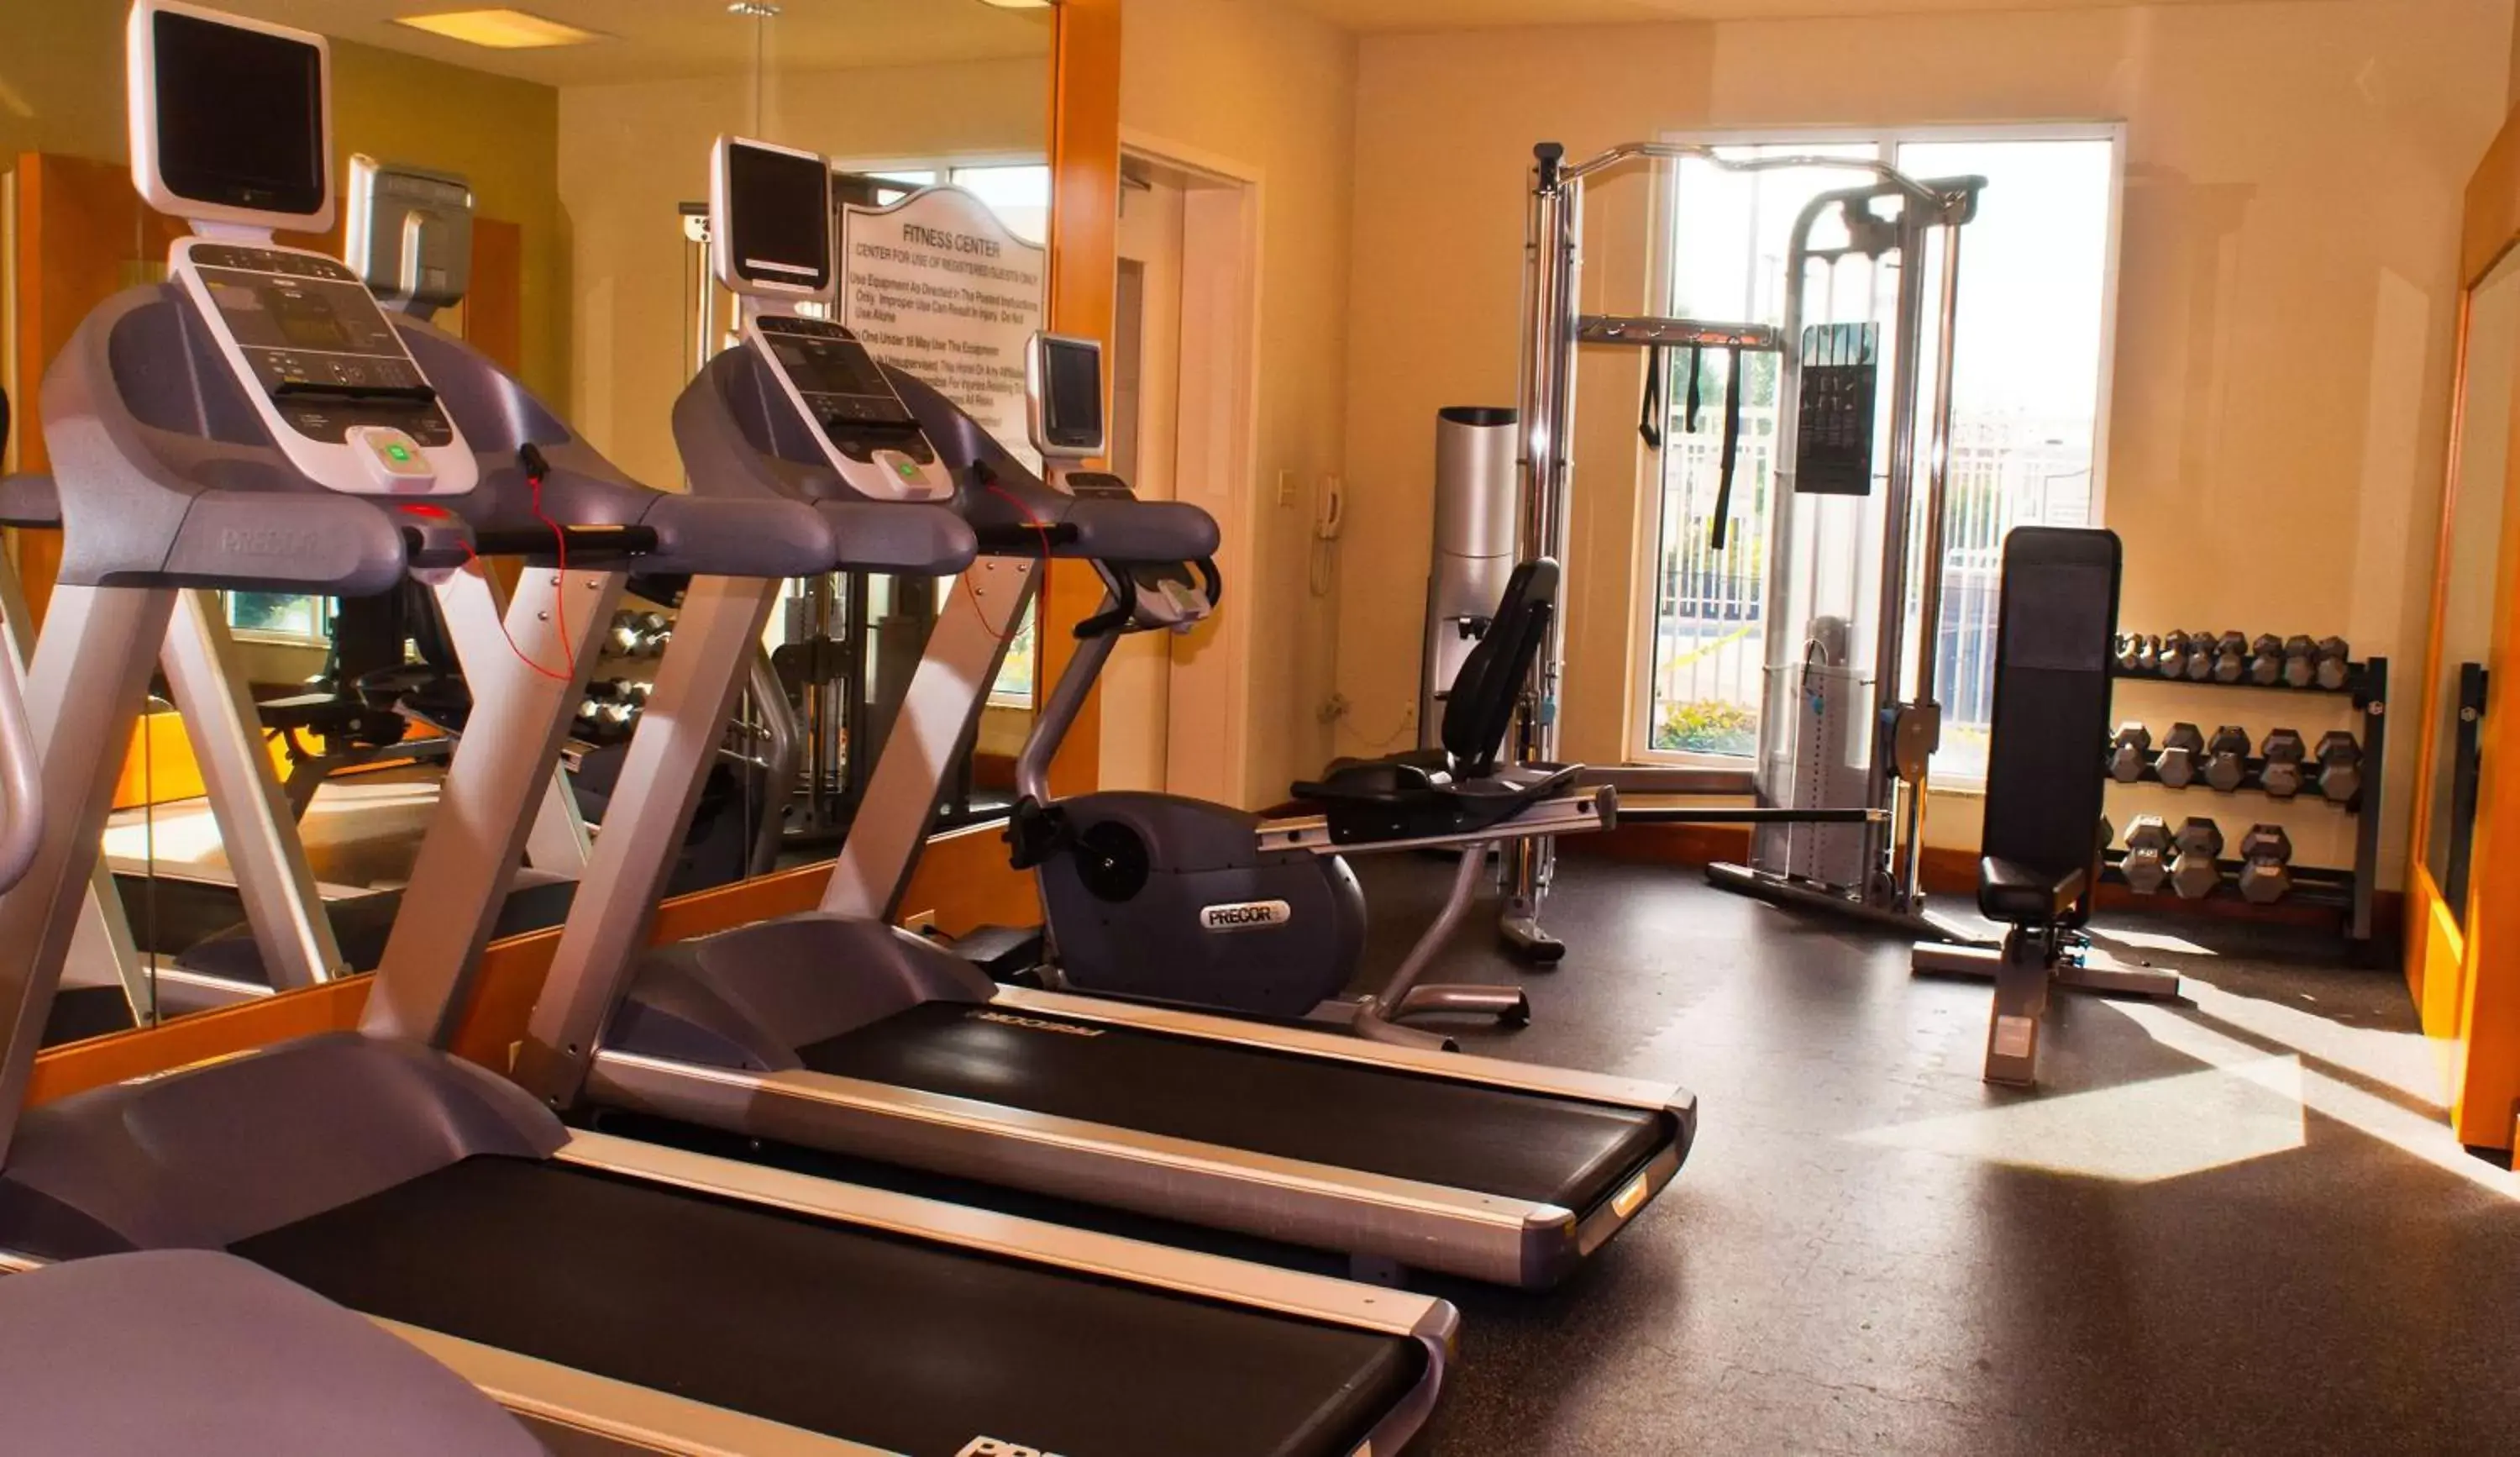 Fitness centre/facilities, Fitness Center/Facilities in Hilton Garden Inn Houston Westbelt